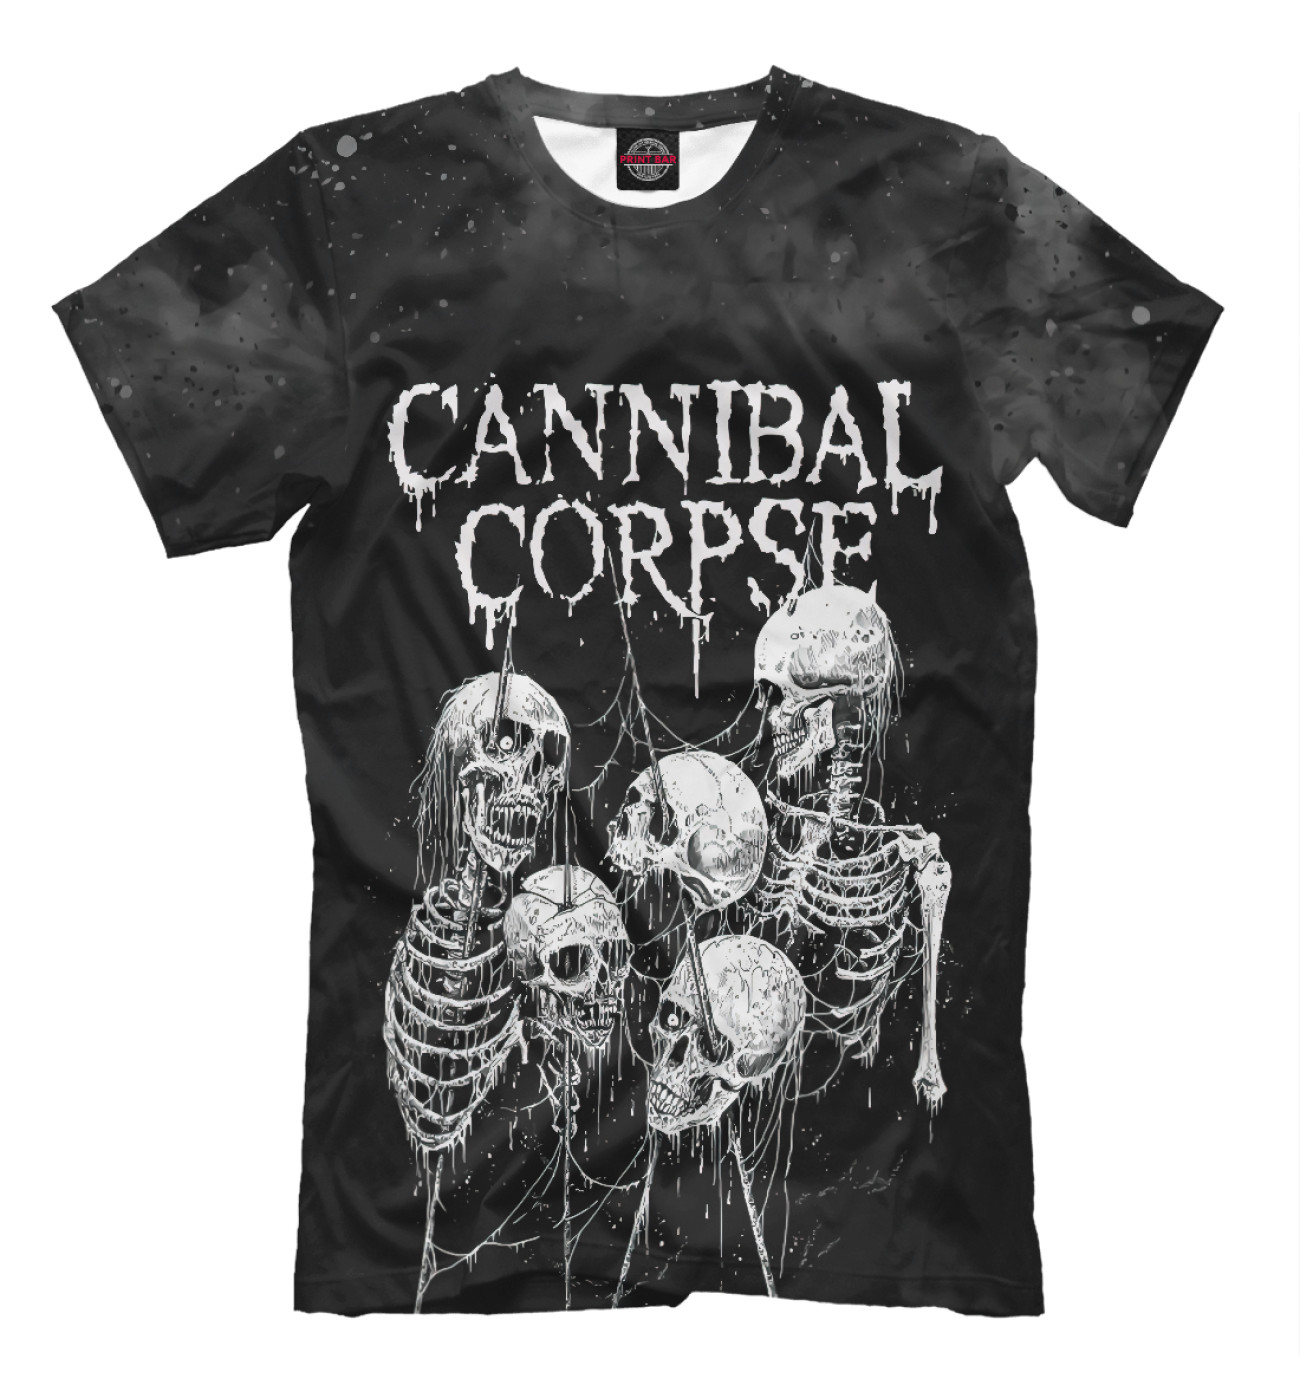 Мужская Футболка Cannibal Corpse, артикул: CCR-822217-fut-2